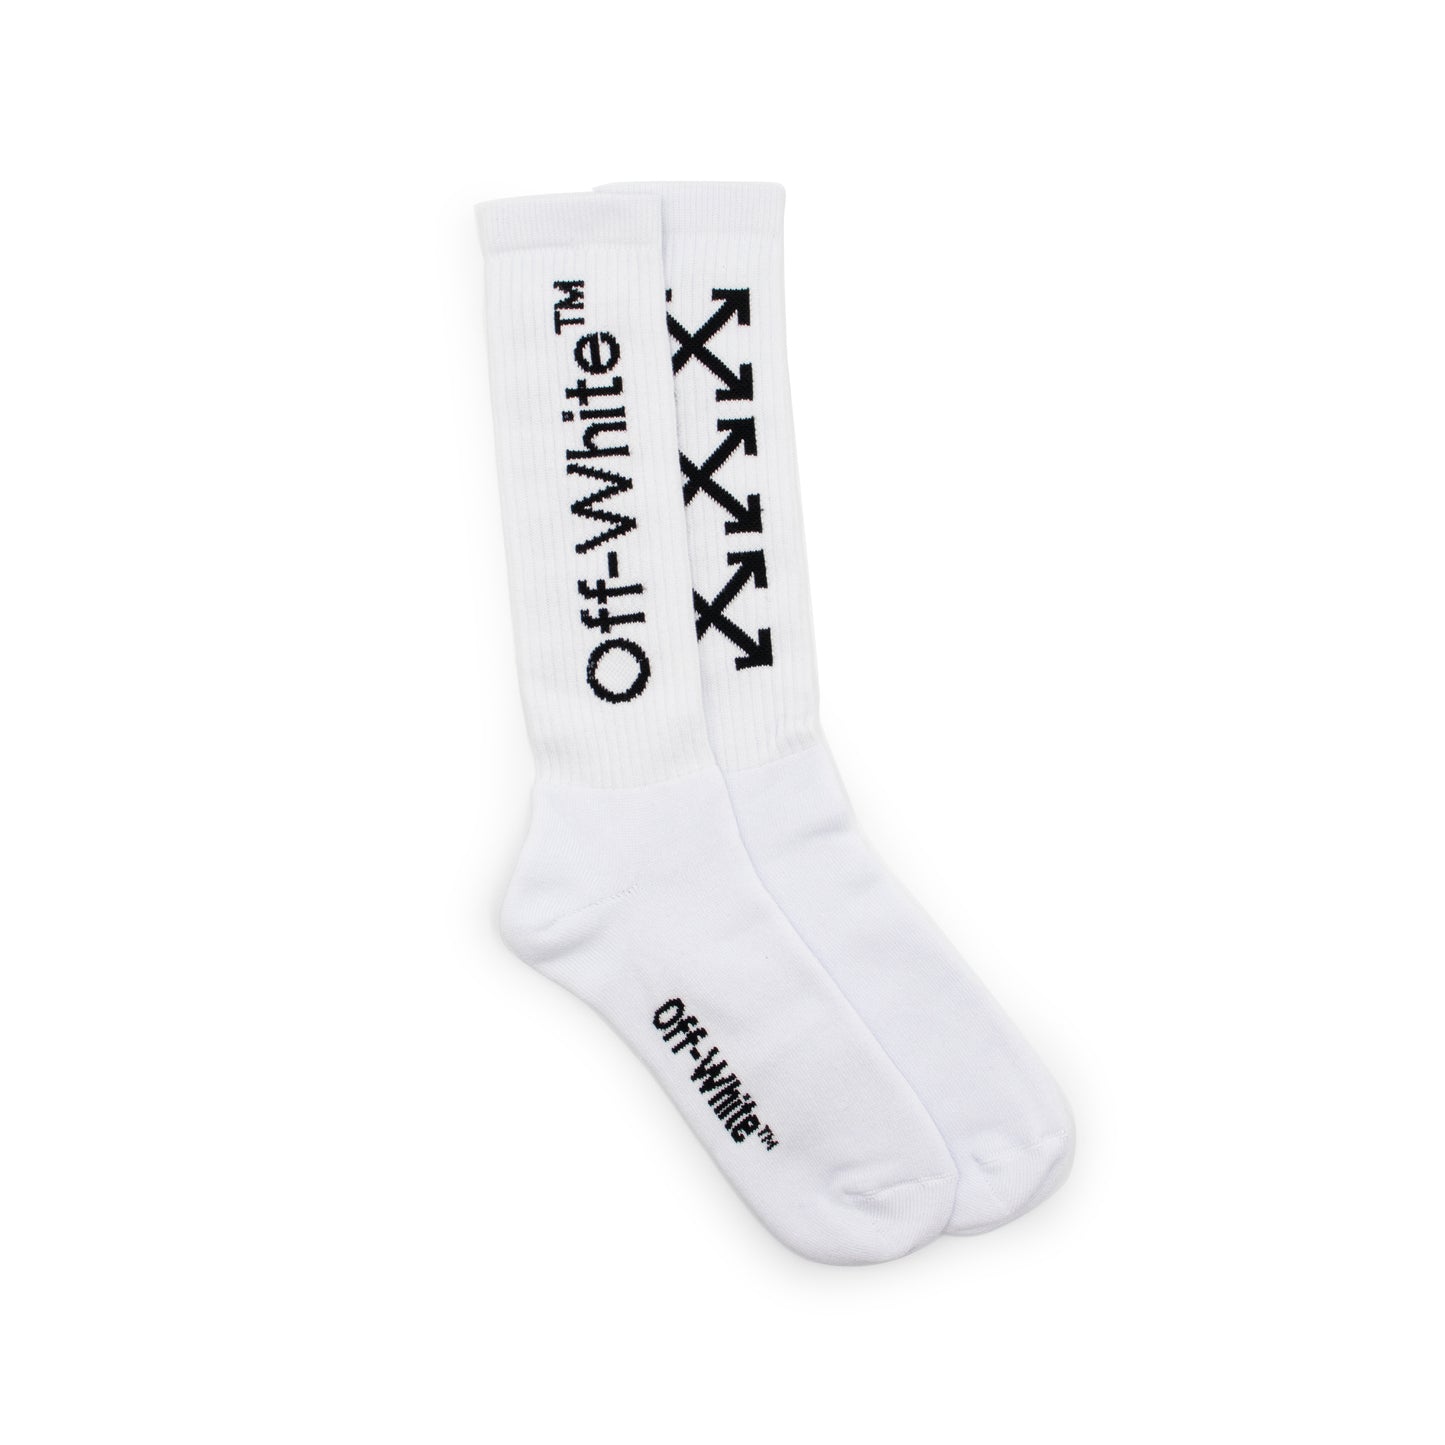 Classic Mid Length Arrows Socks in White/Black